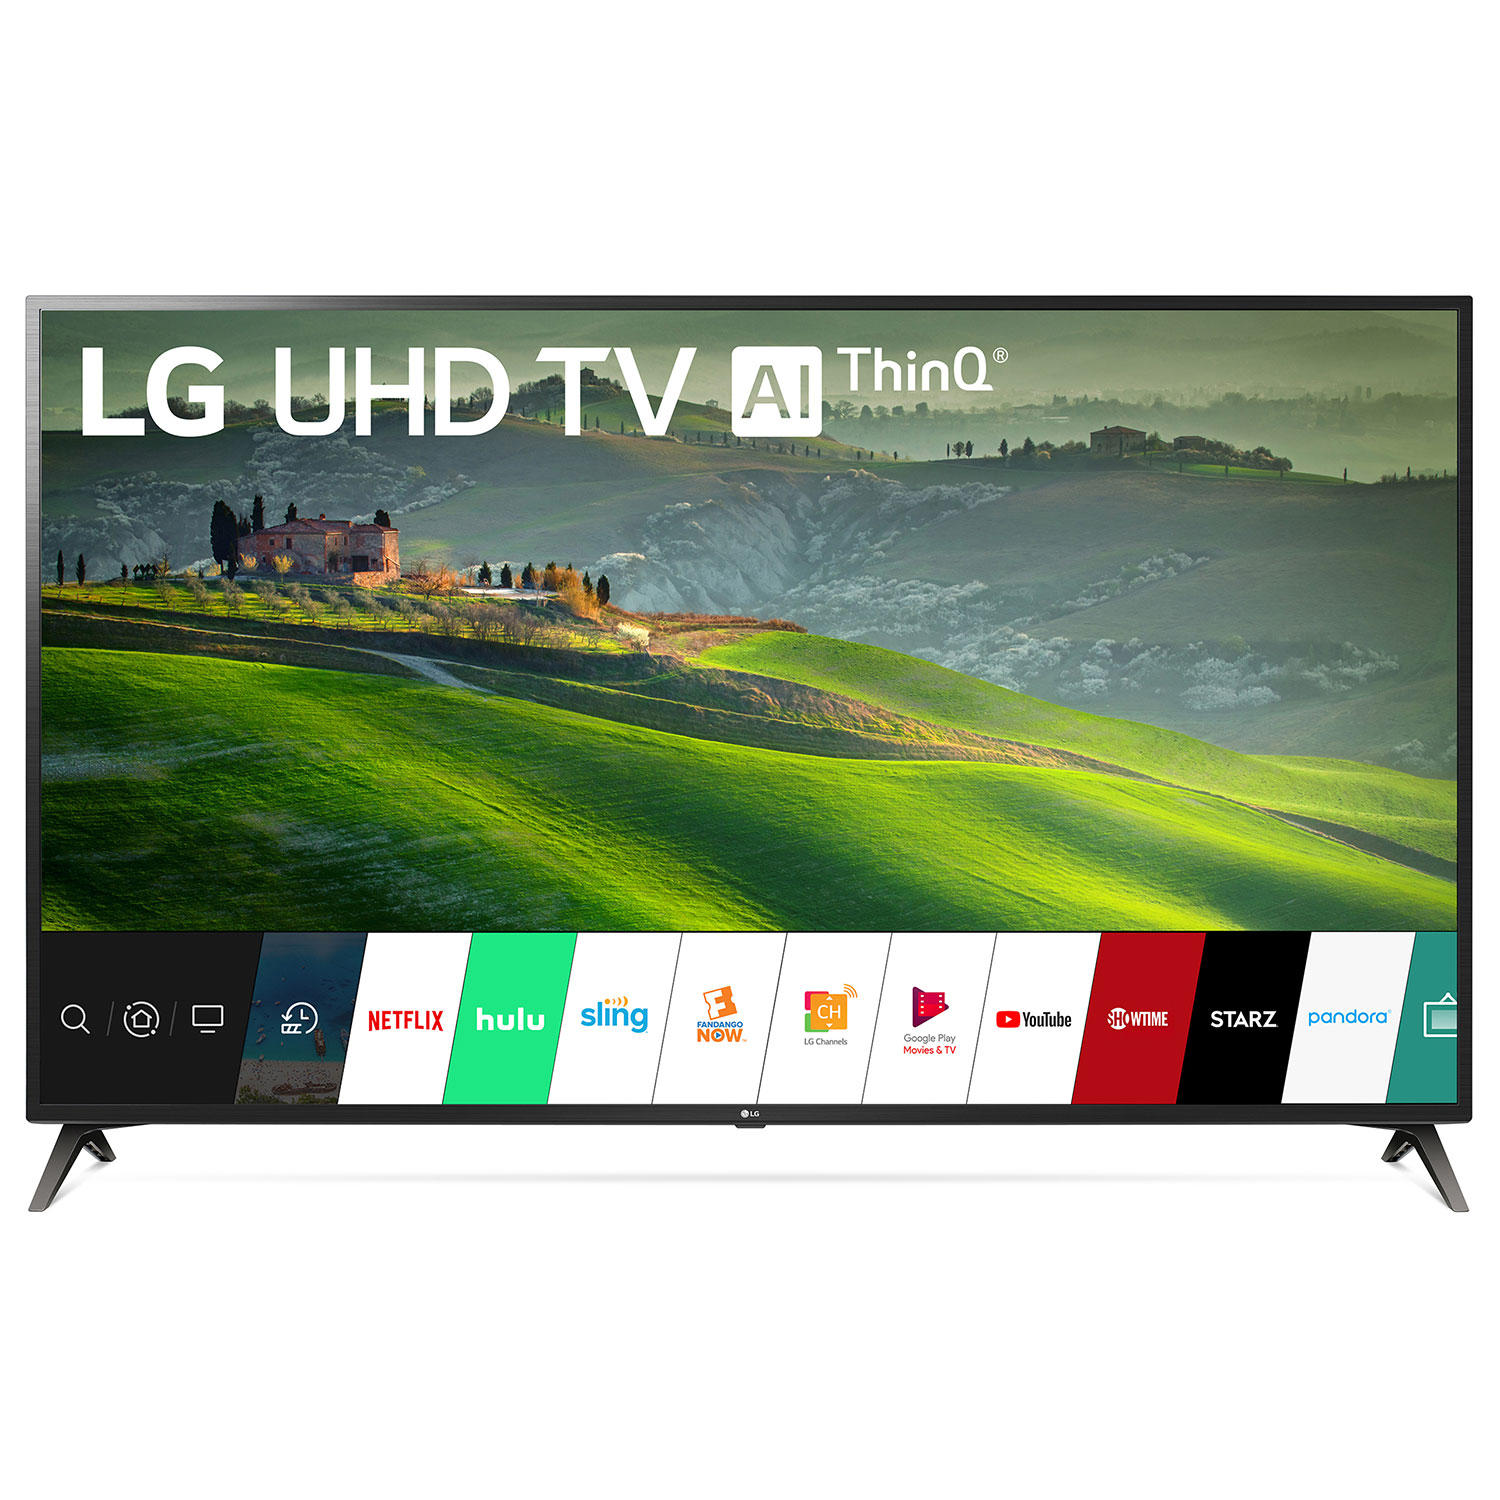 LG 70UM6970PUA 70″ 4K Ultra HD Smart HDR TV with AI ThinQ